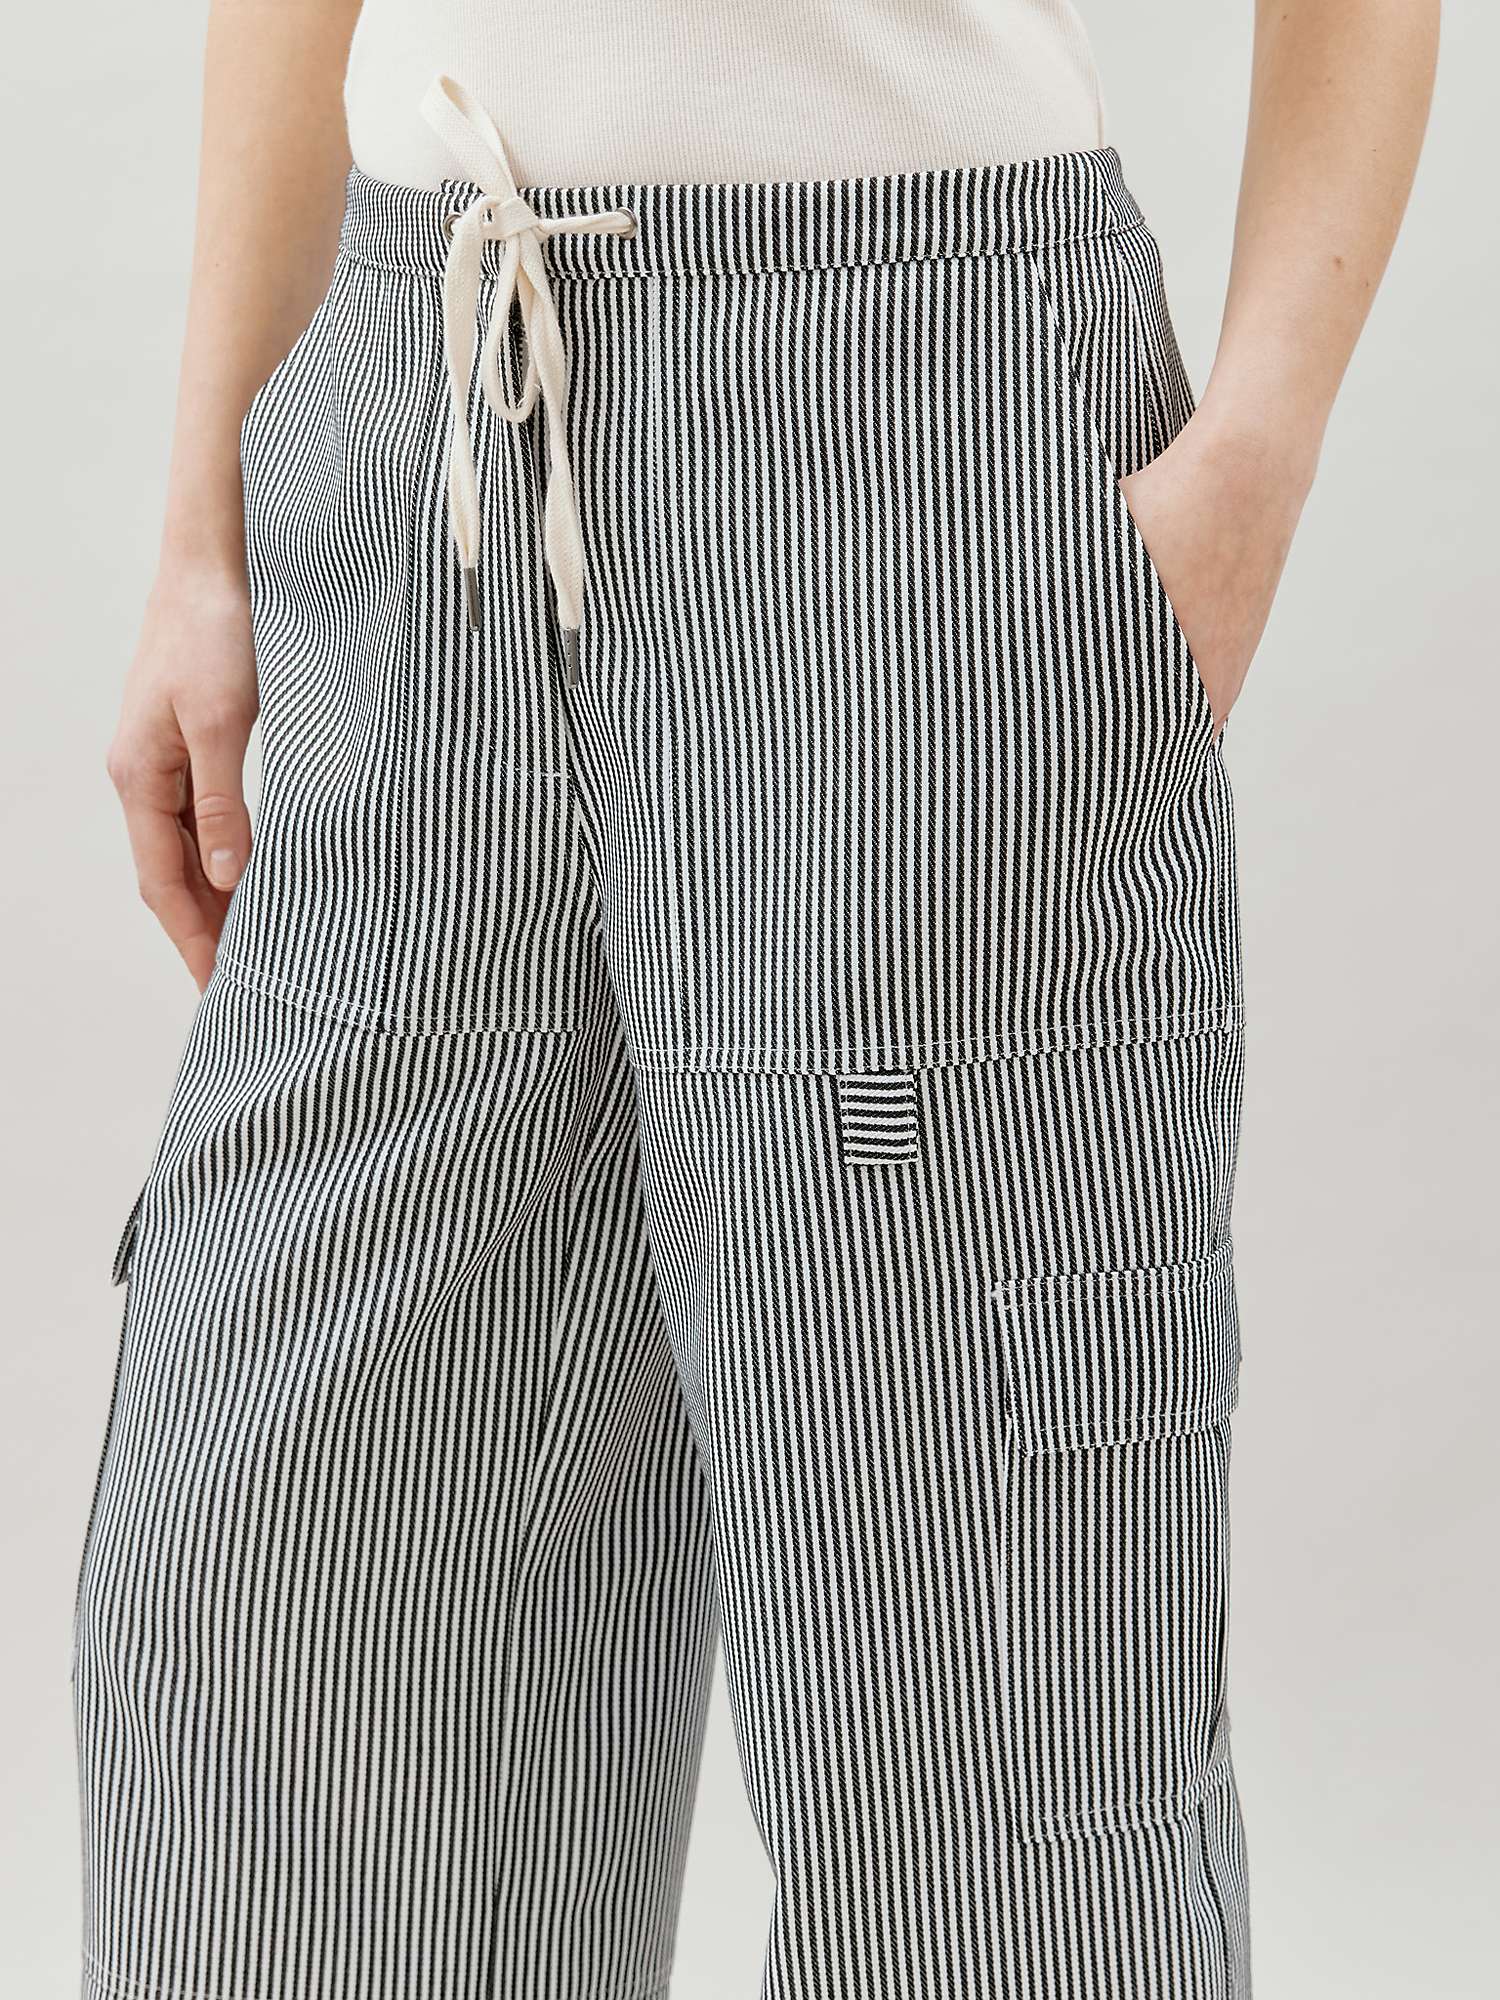 Buy Albaray Ticking Stripe Drawstring Cargo Trousers, Black/White Online at johnlewis.com